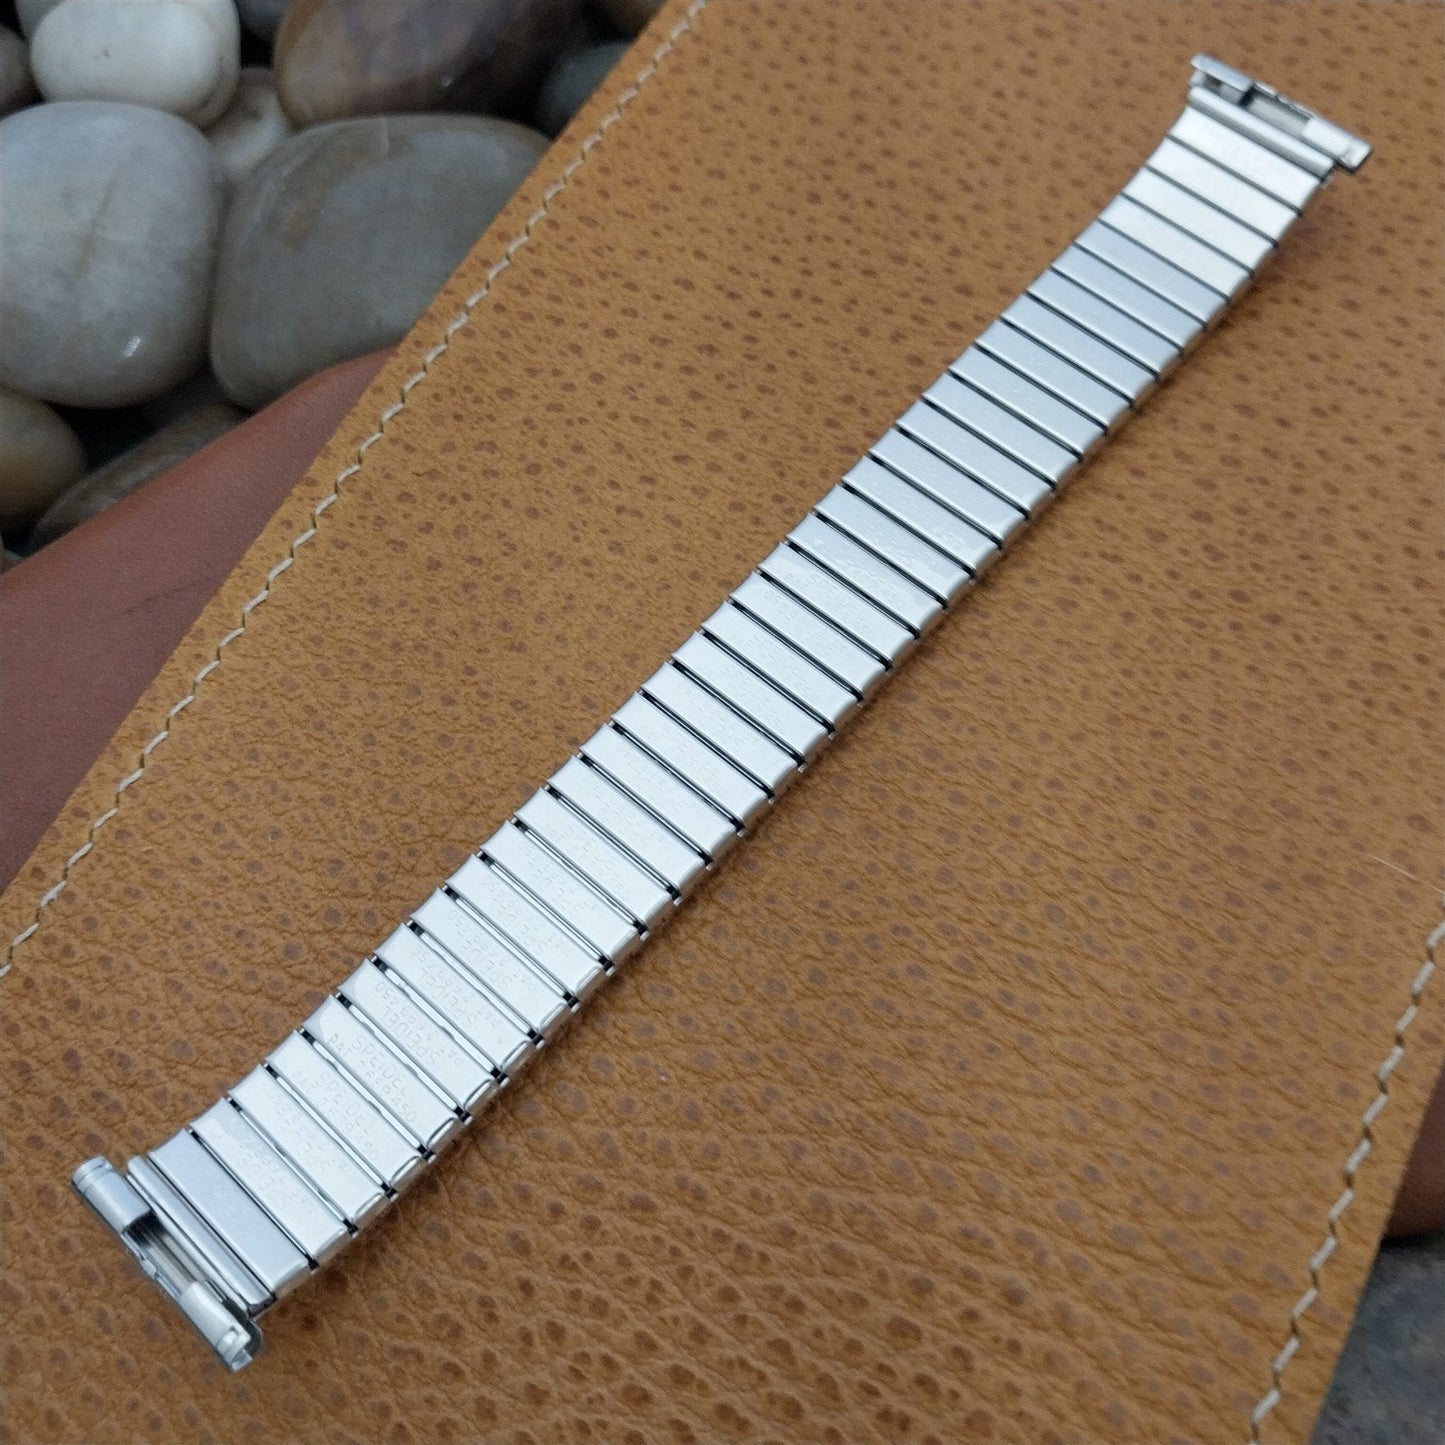 19mm 18mm 16mm 10k White Gold-Fill Expansion Speidel 1960 Vintage Watch Band